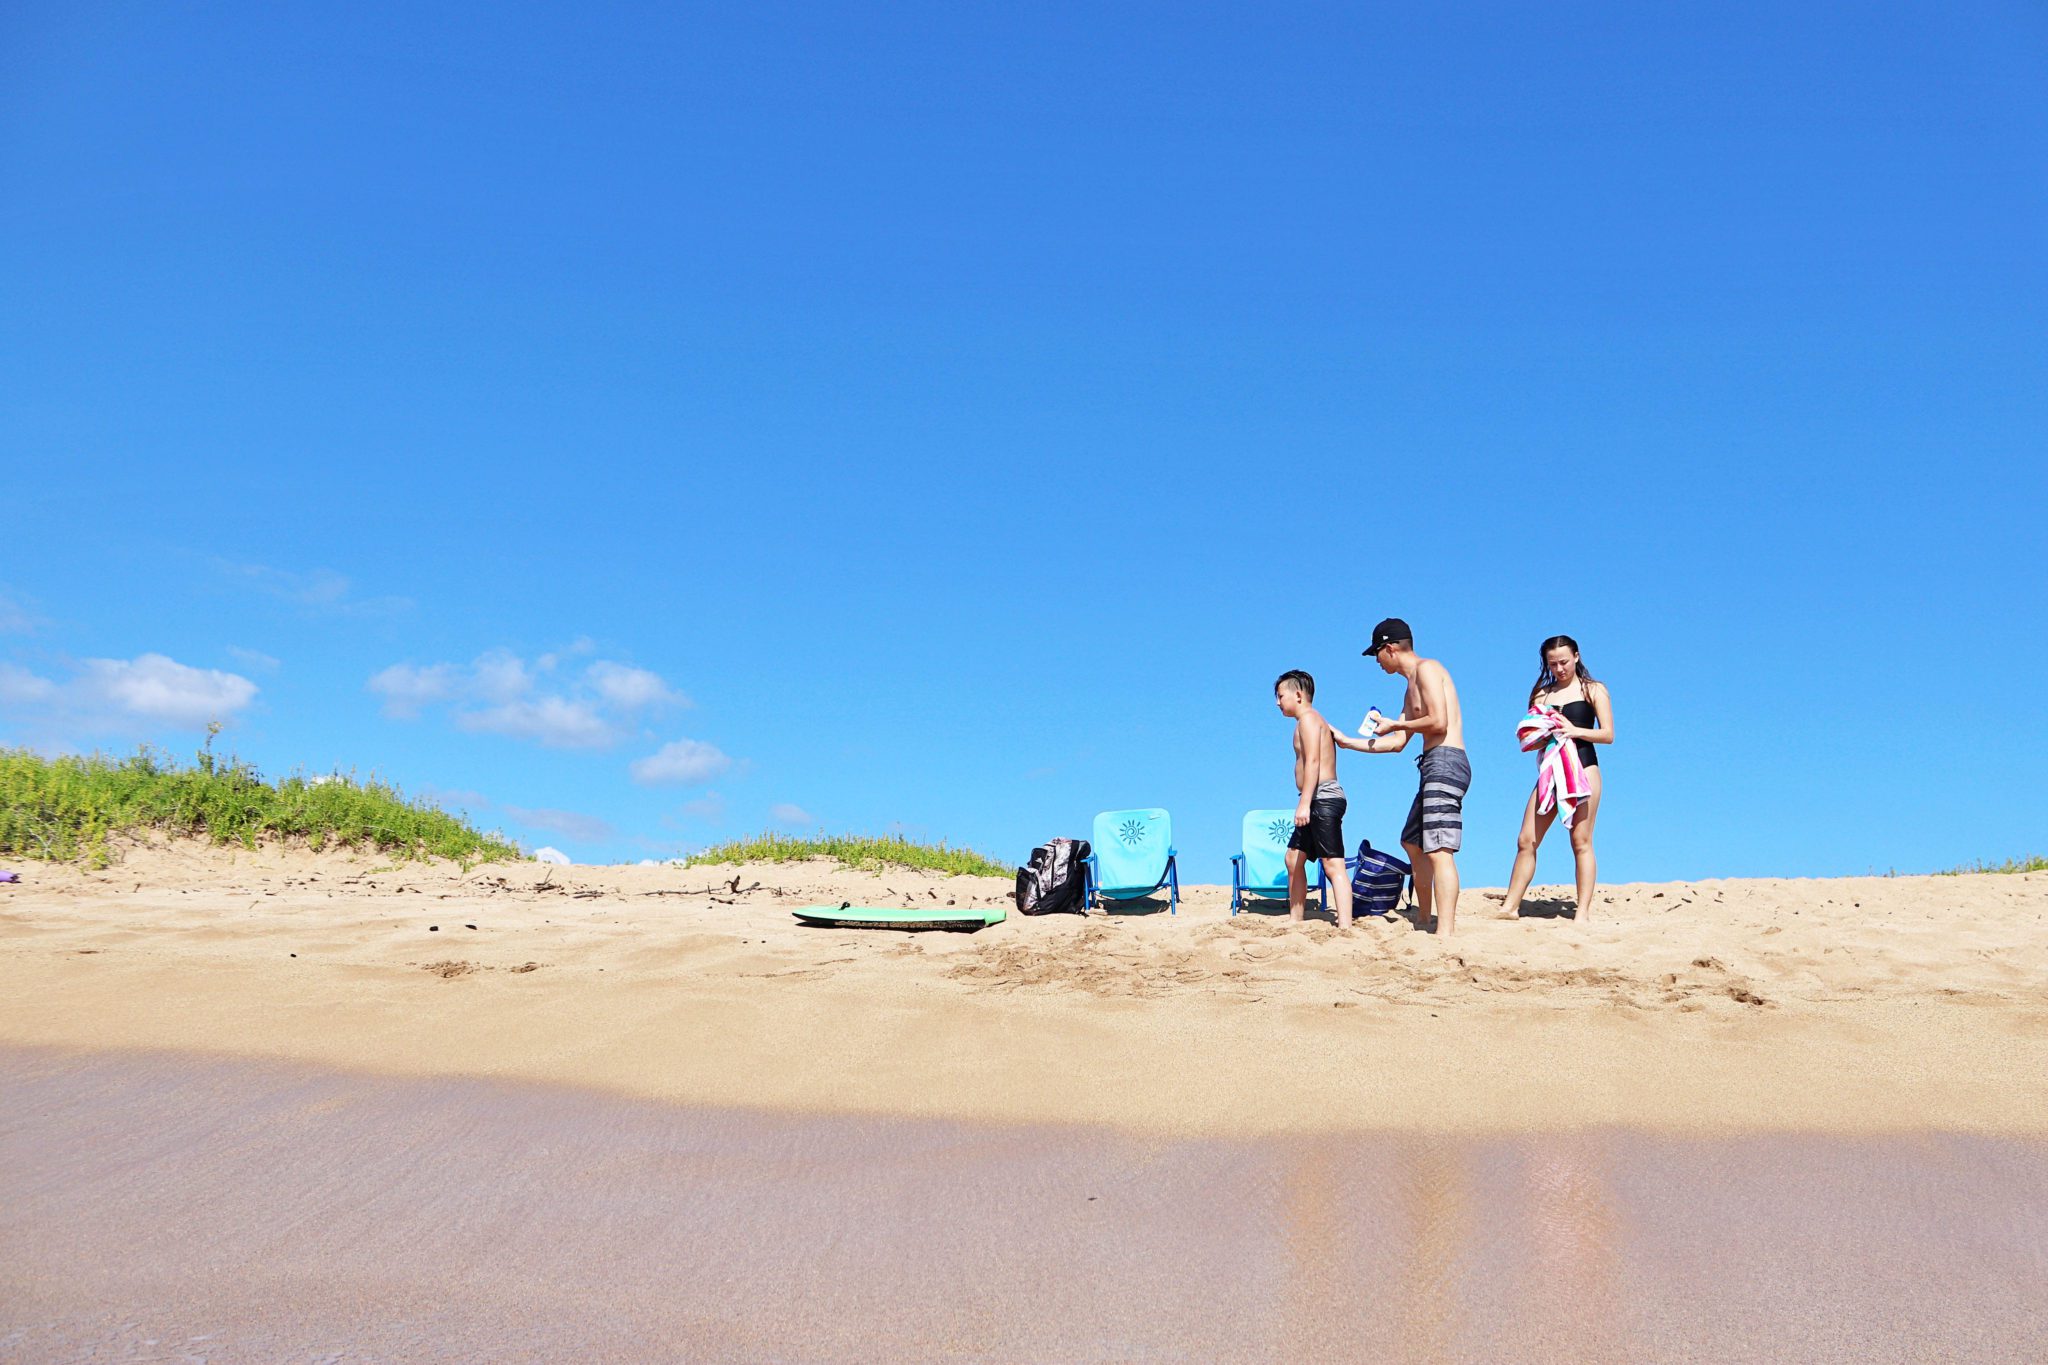 Salt Pond Beach is one of the best beaches for kids in Kauai- Top things to do in Kauai #kauai #hawaii #saltpondbeach